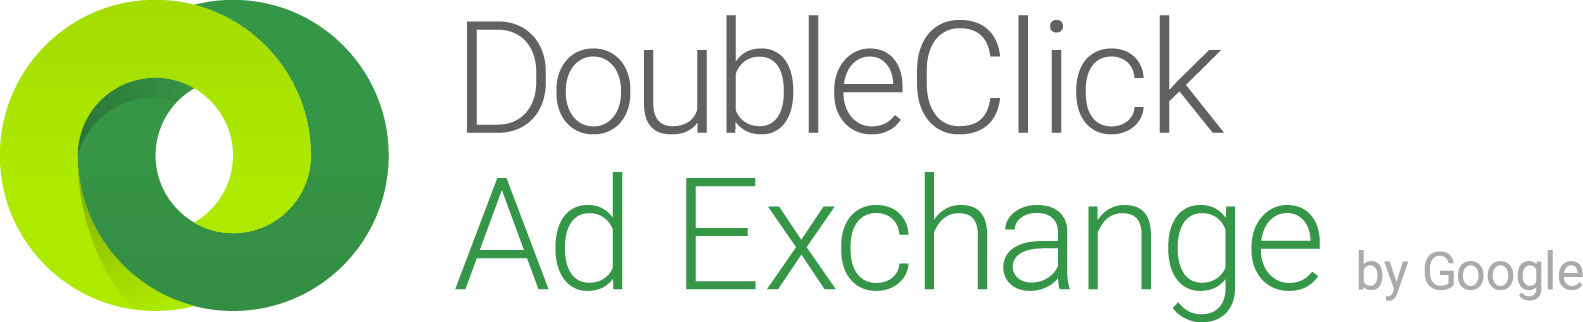 Google DoubleClick Ad Exchange logo